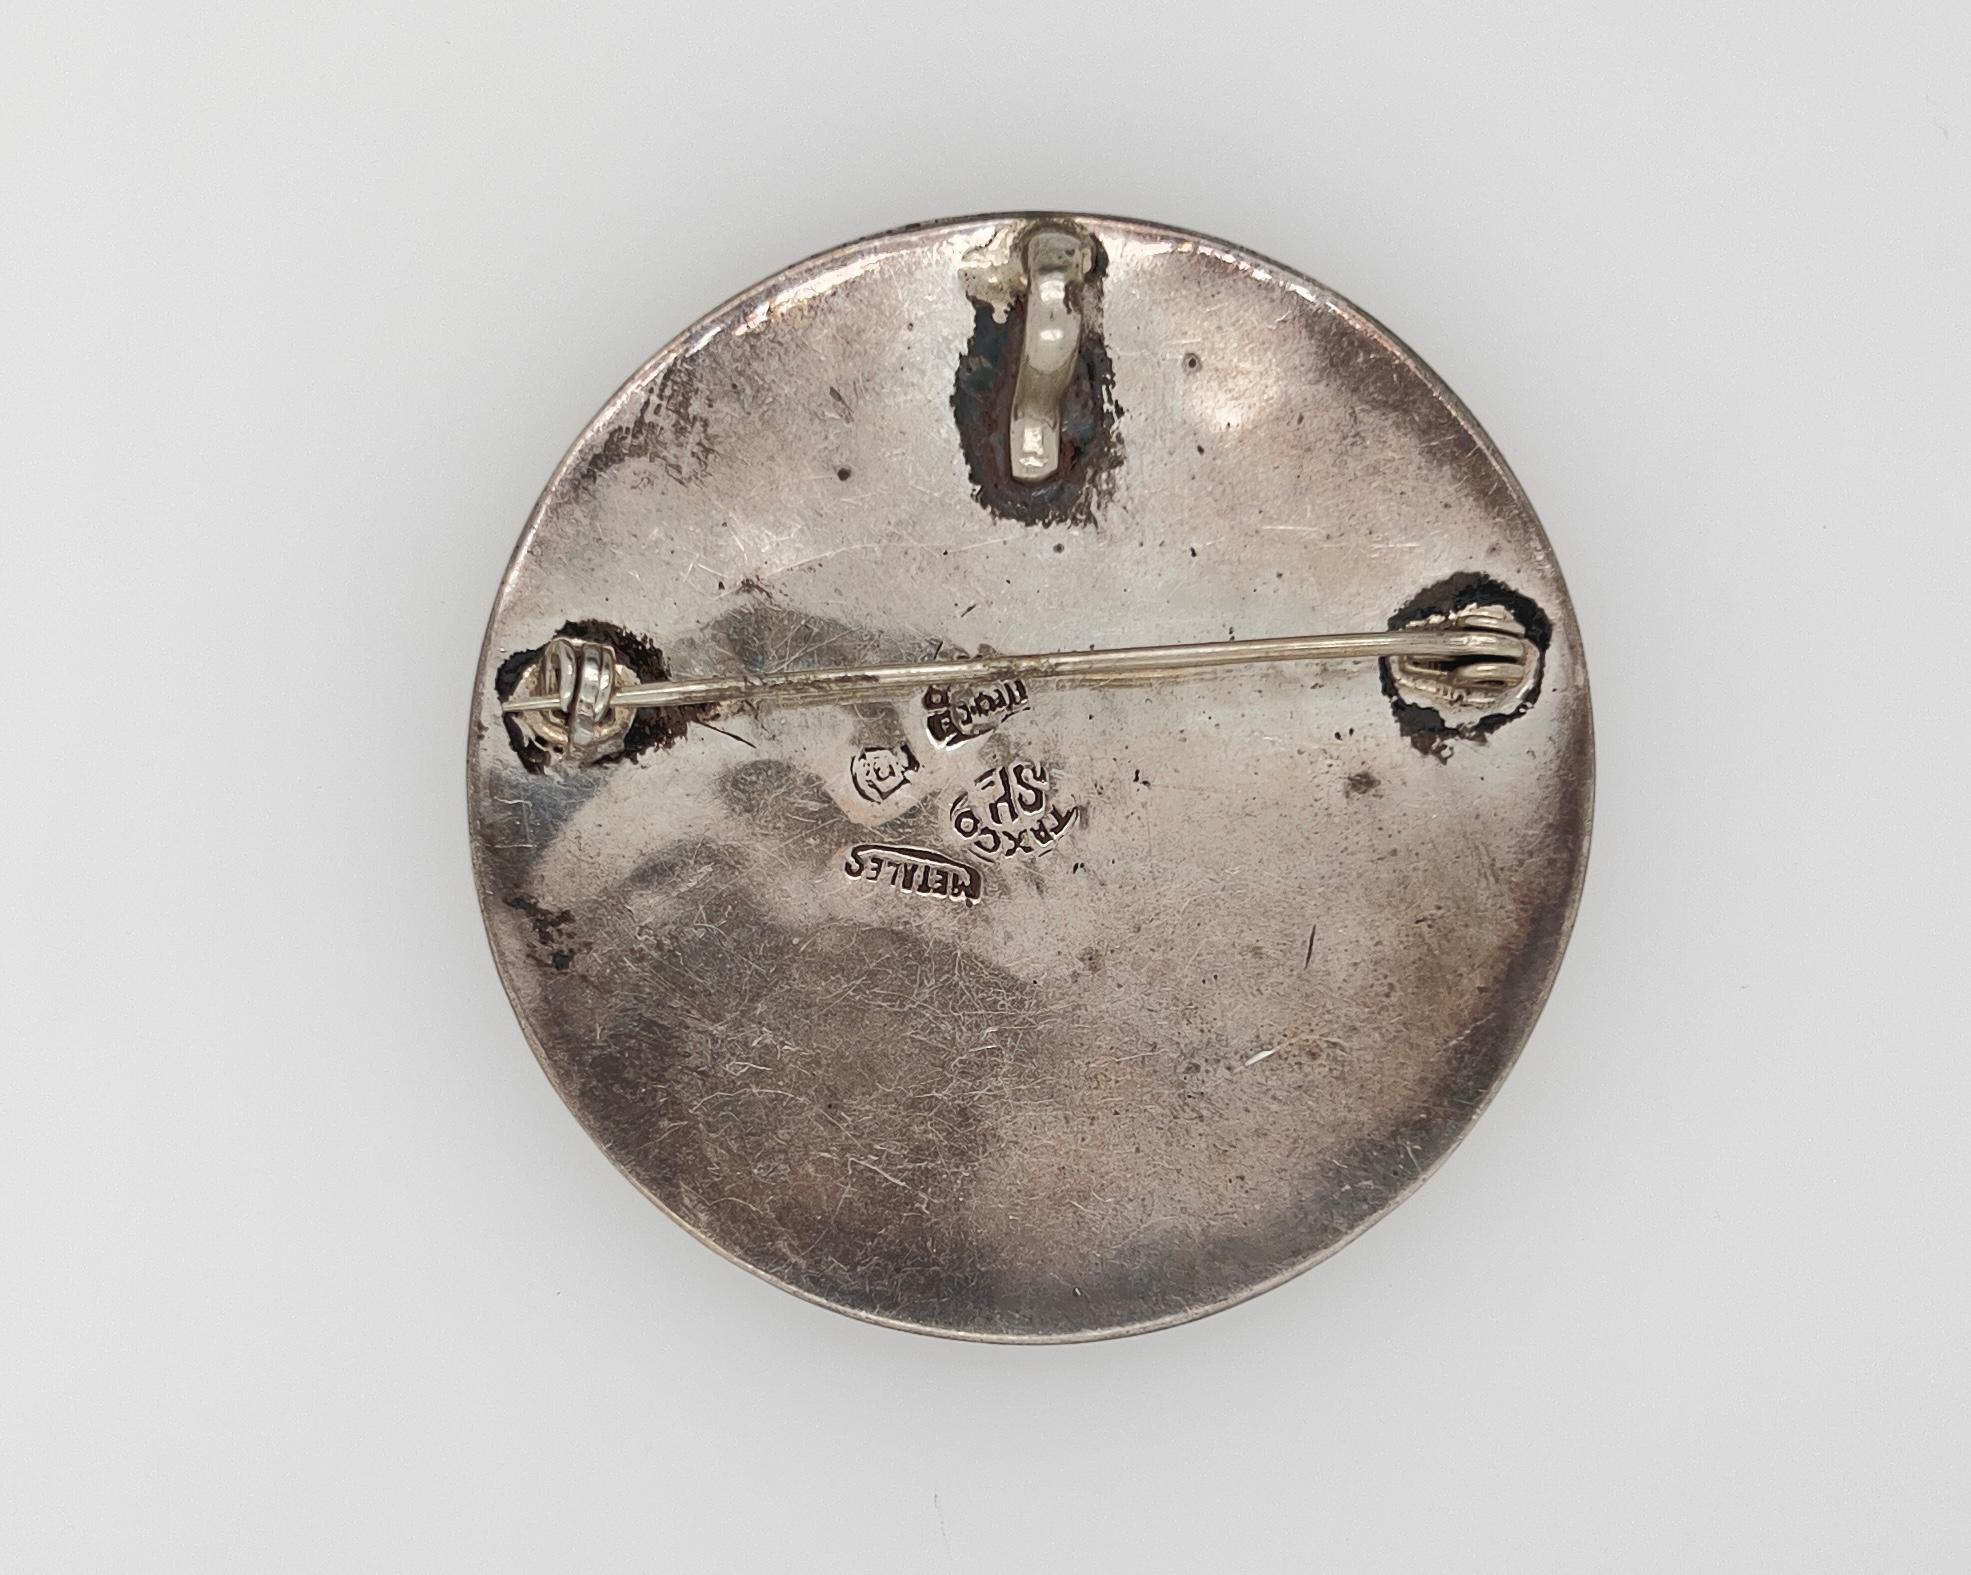 Metal: Silver
Natural Stones
Antique
Diameter: 2 1/4 inch